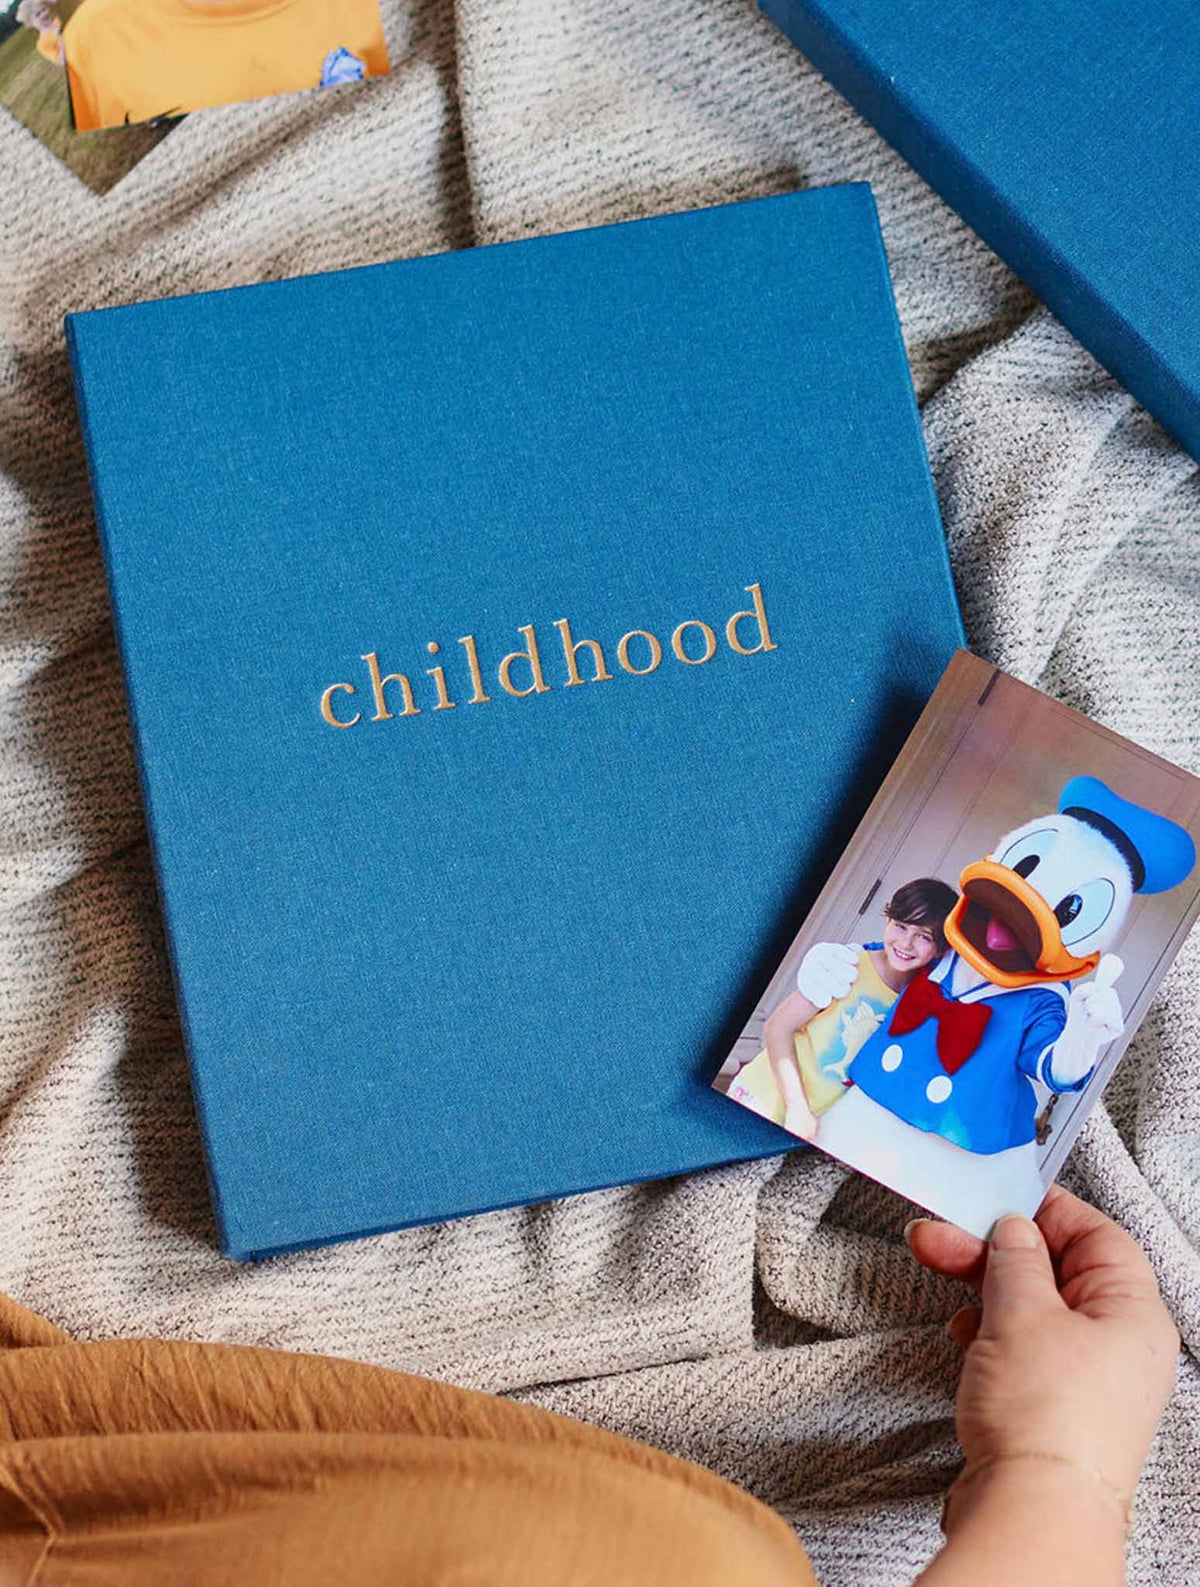 Childhood. Your Childhood Memories. Royal Blue